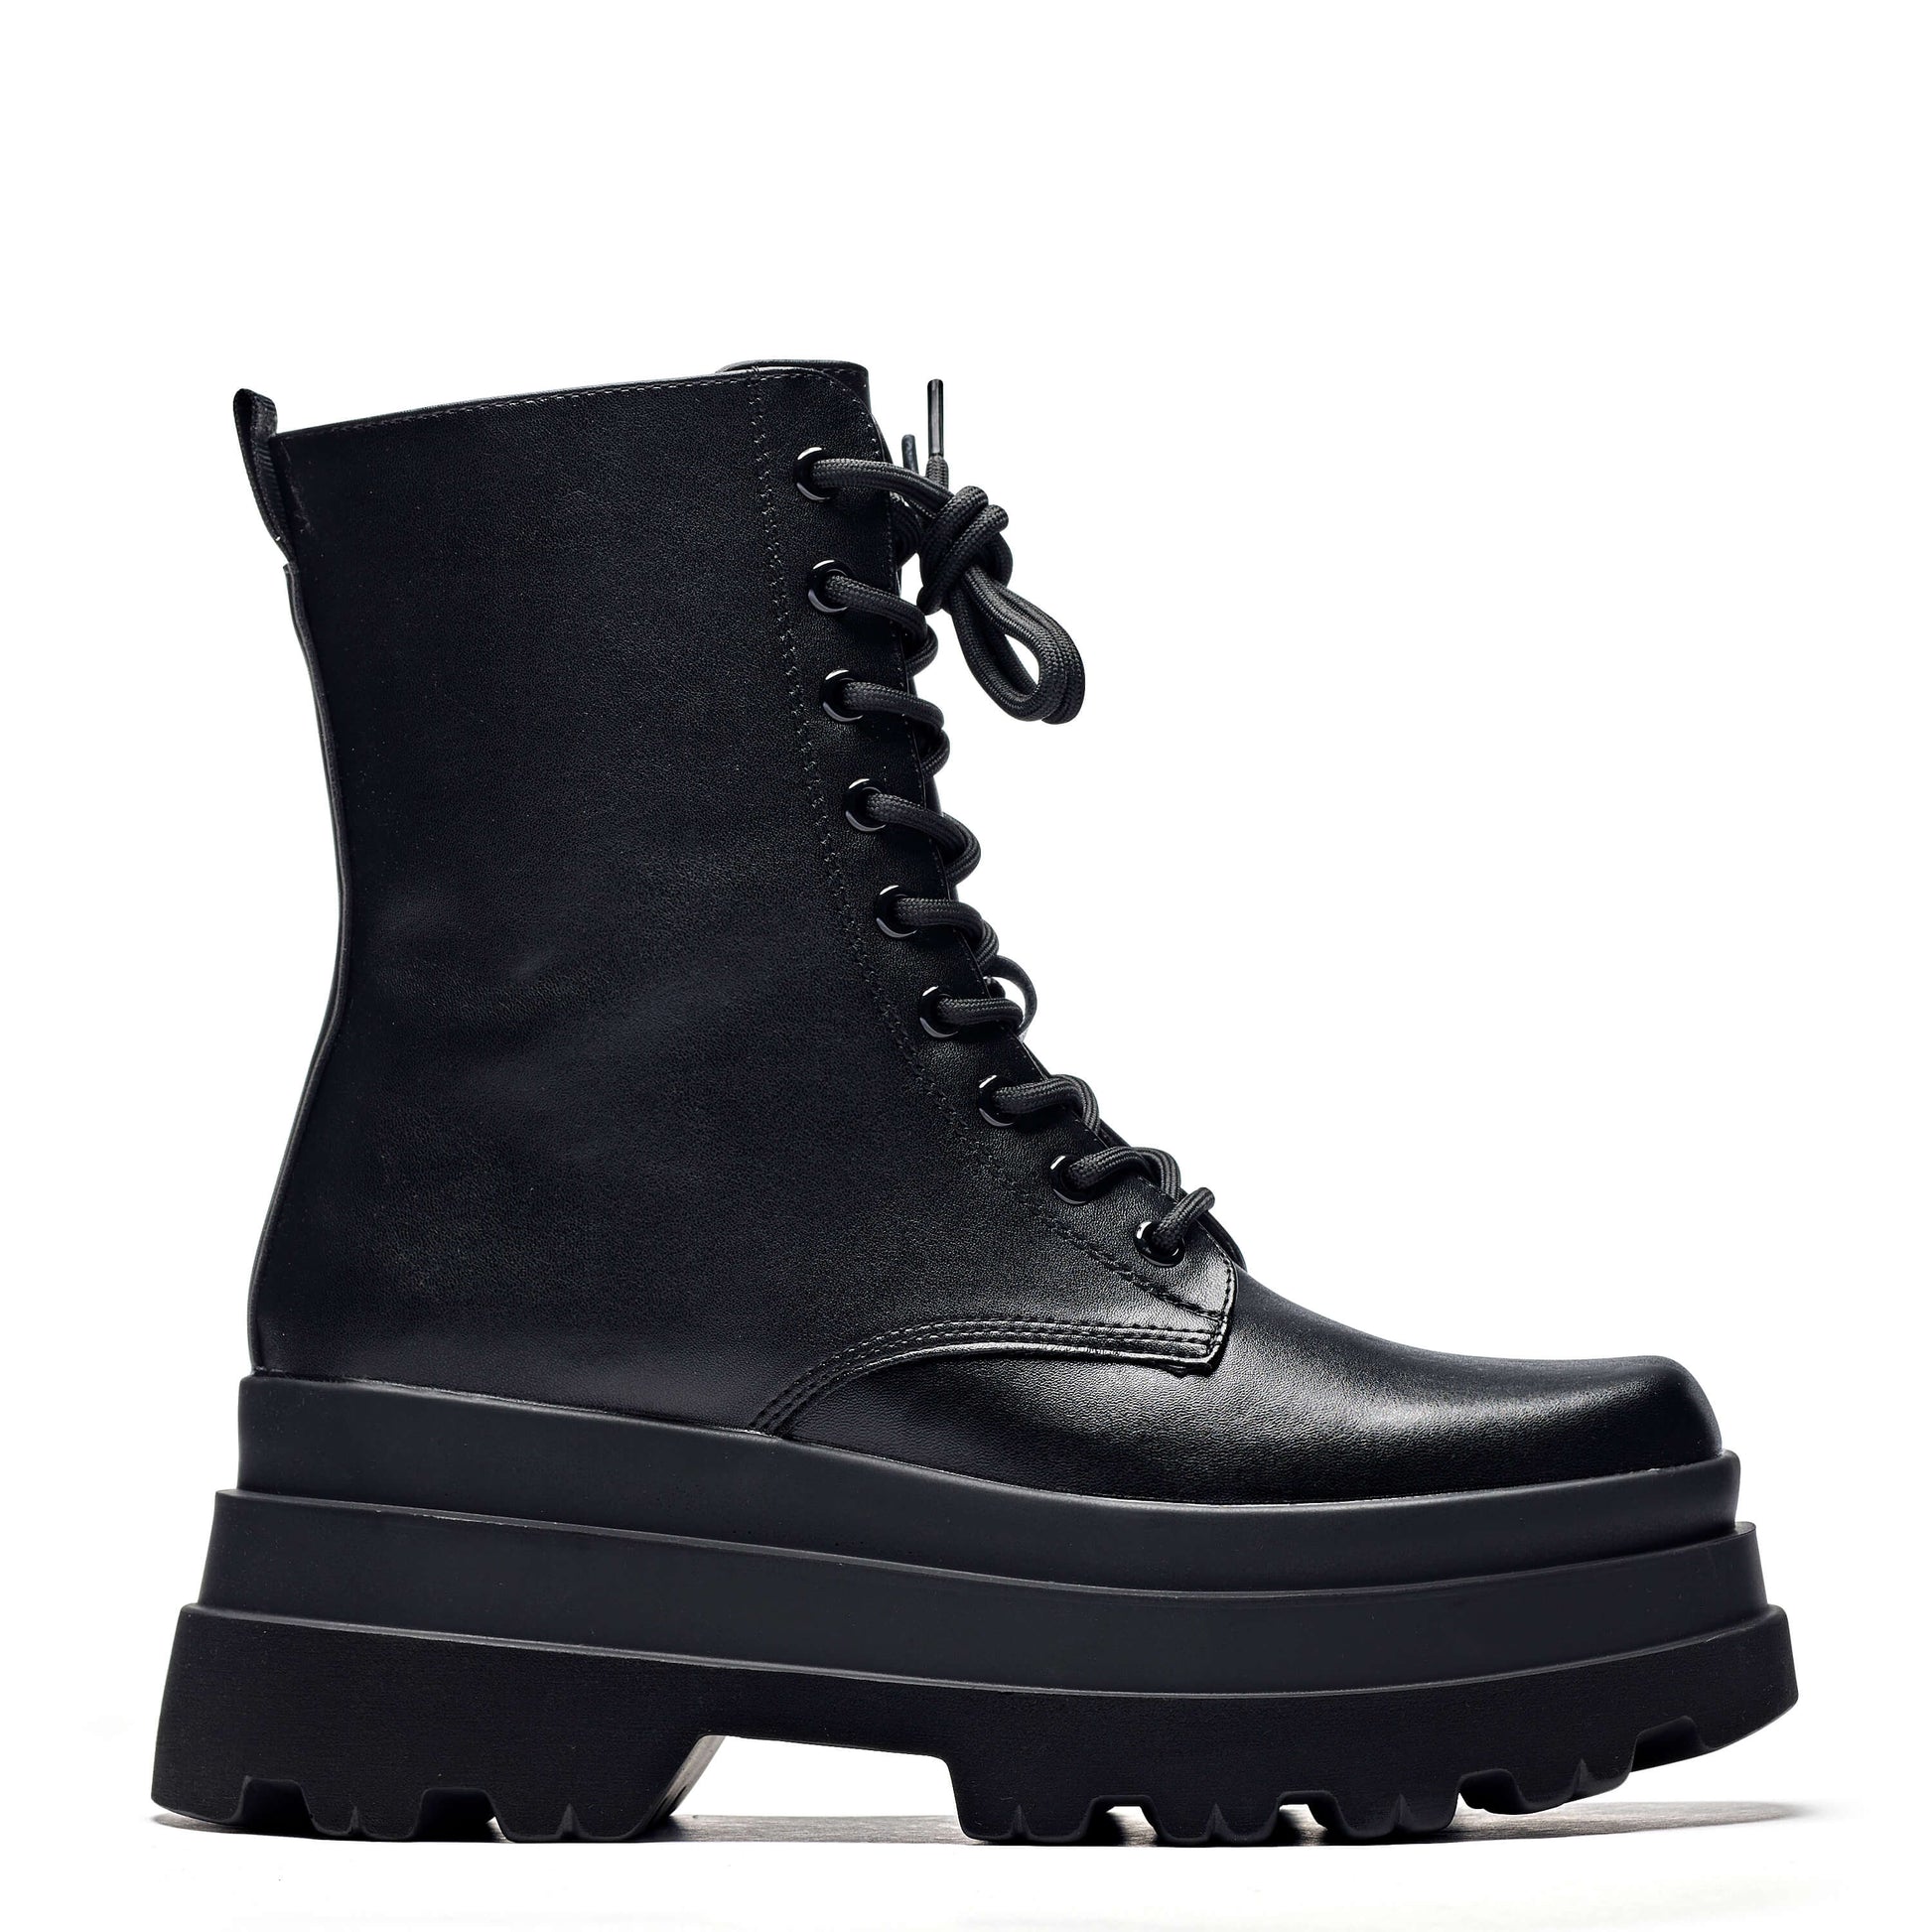 Deathwatch Trident Platform Boots - Ankle Boots - KOI Footwear - Black - Side View